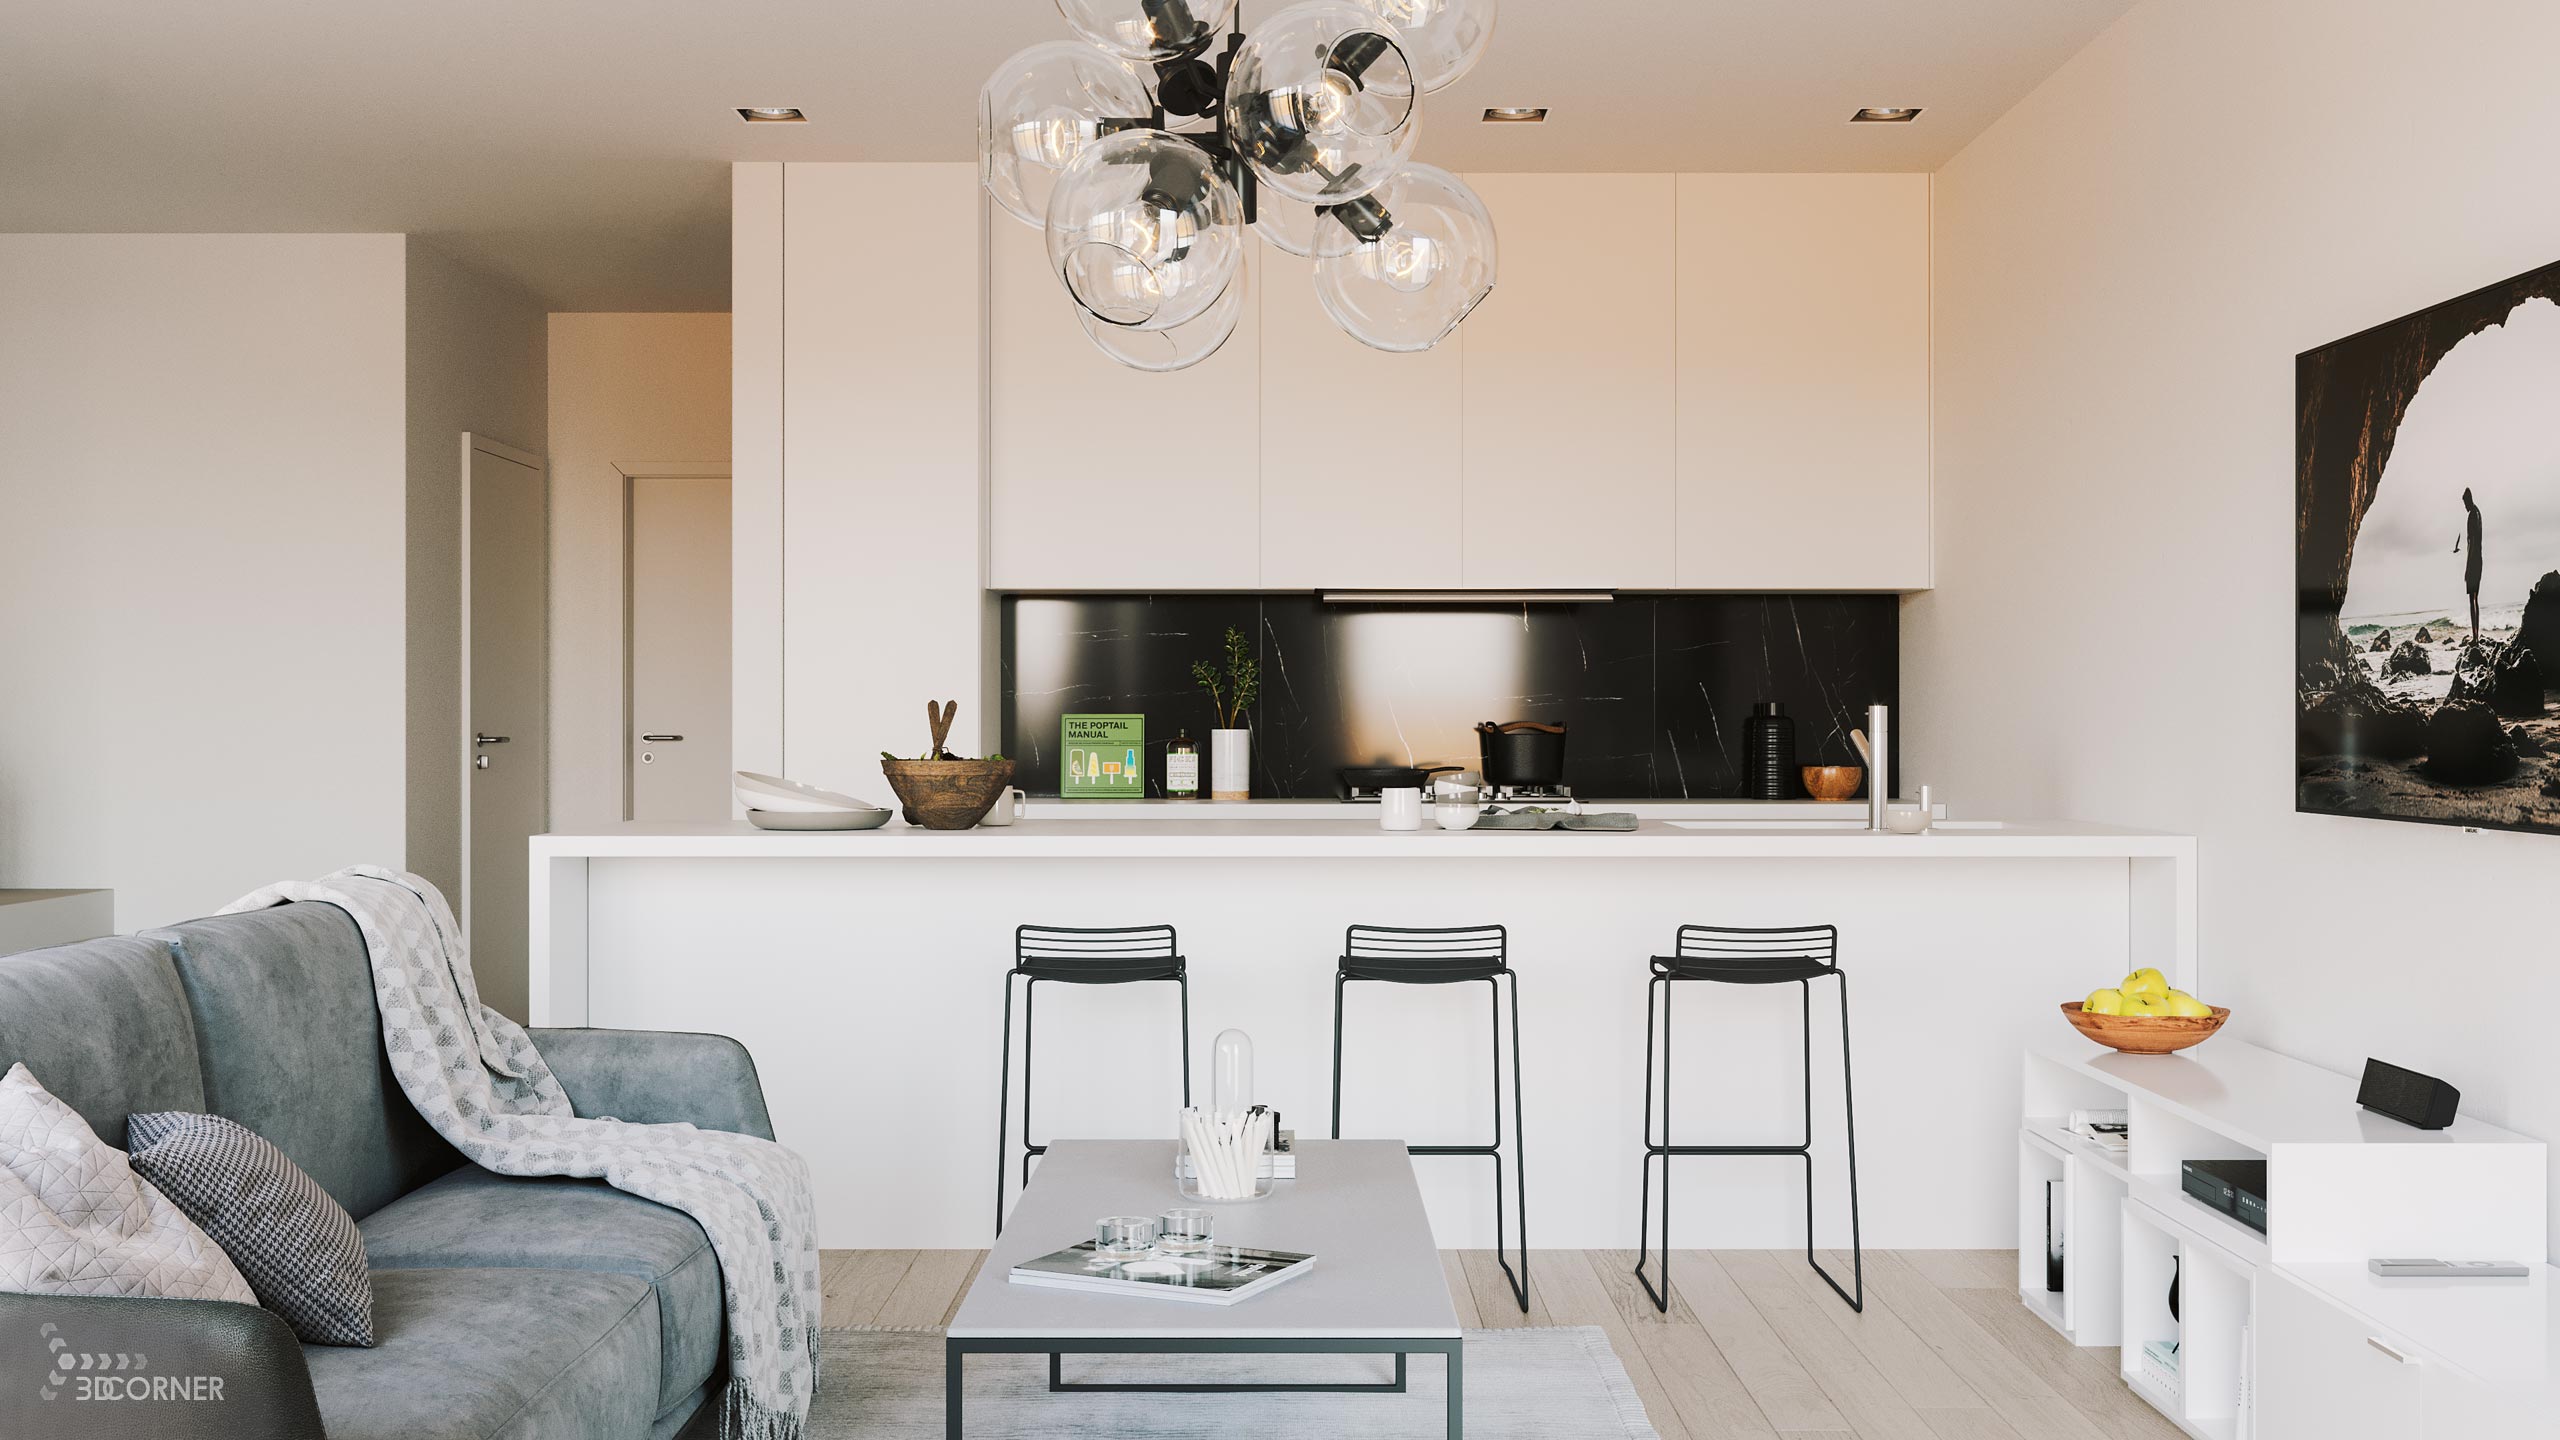 visualization interior photorealistic modern architecture apartment kitchen 3dcorner